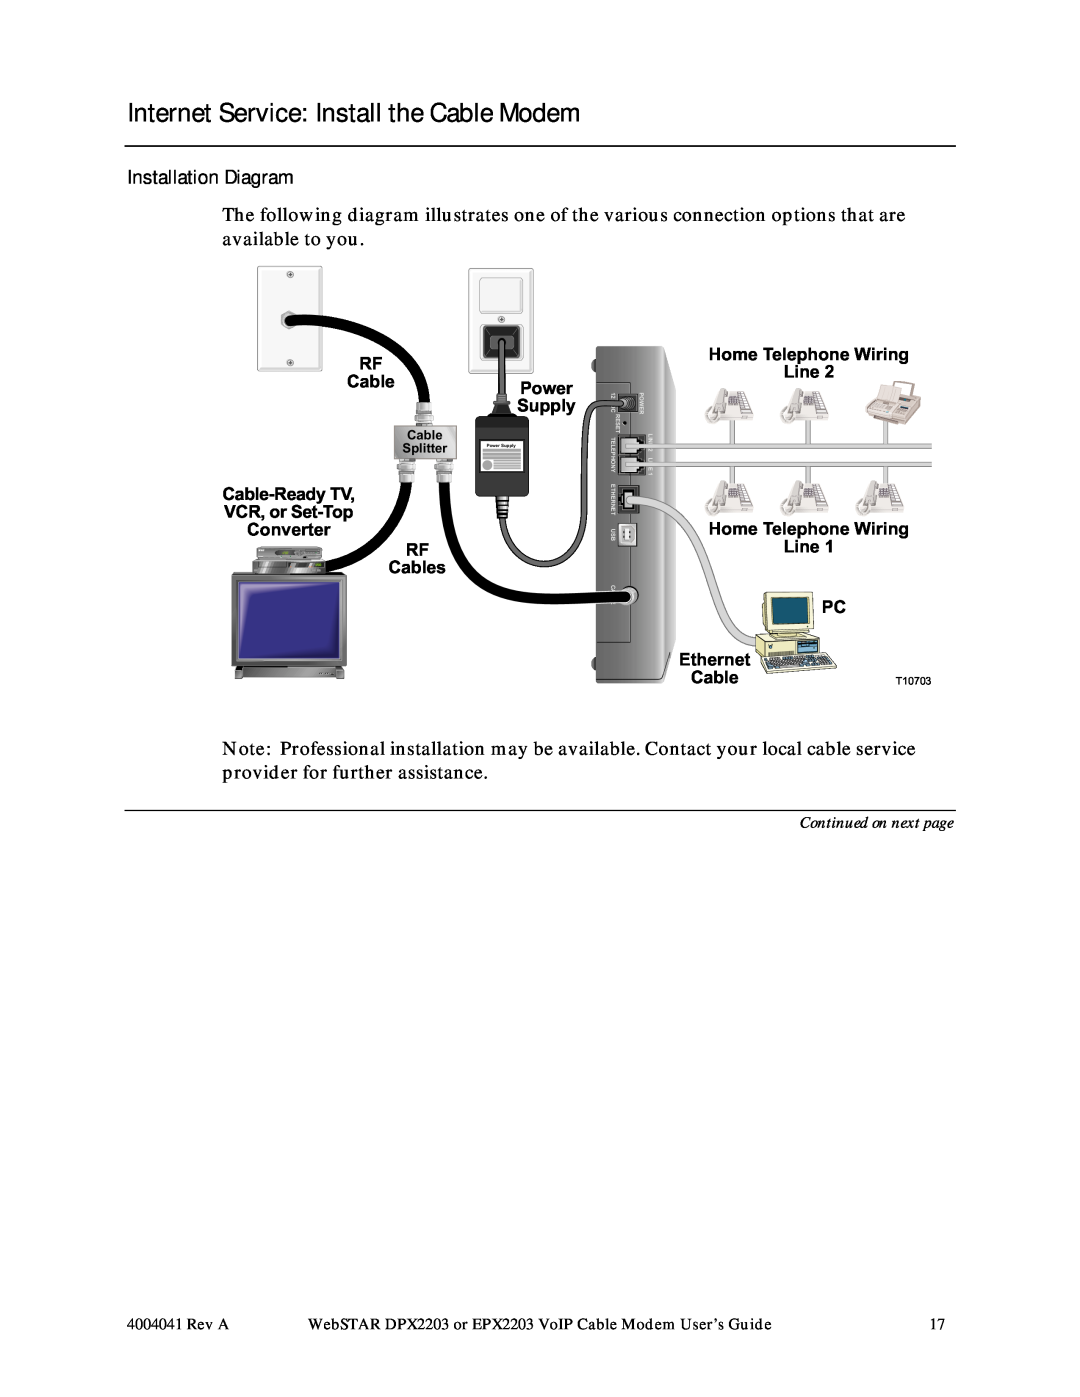 Scientific Atlanta DPX2203, EPX2203 manual Internet Service Install the Cable Modem, Installation Diagram 